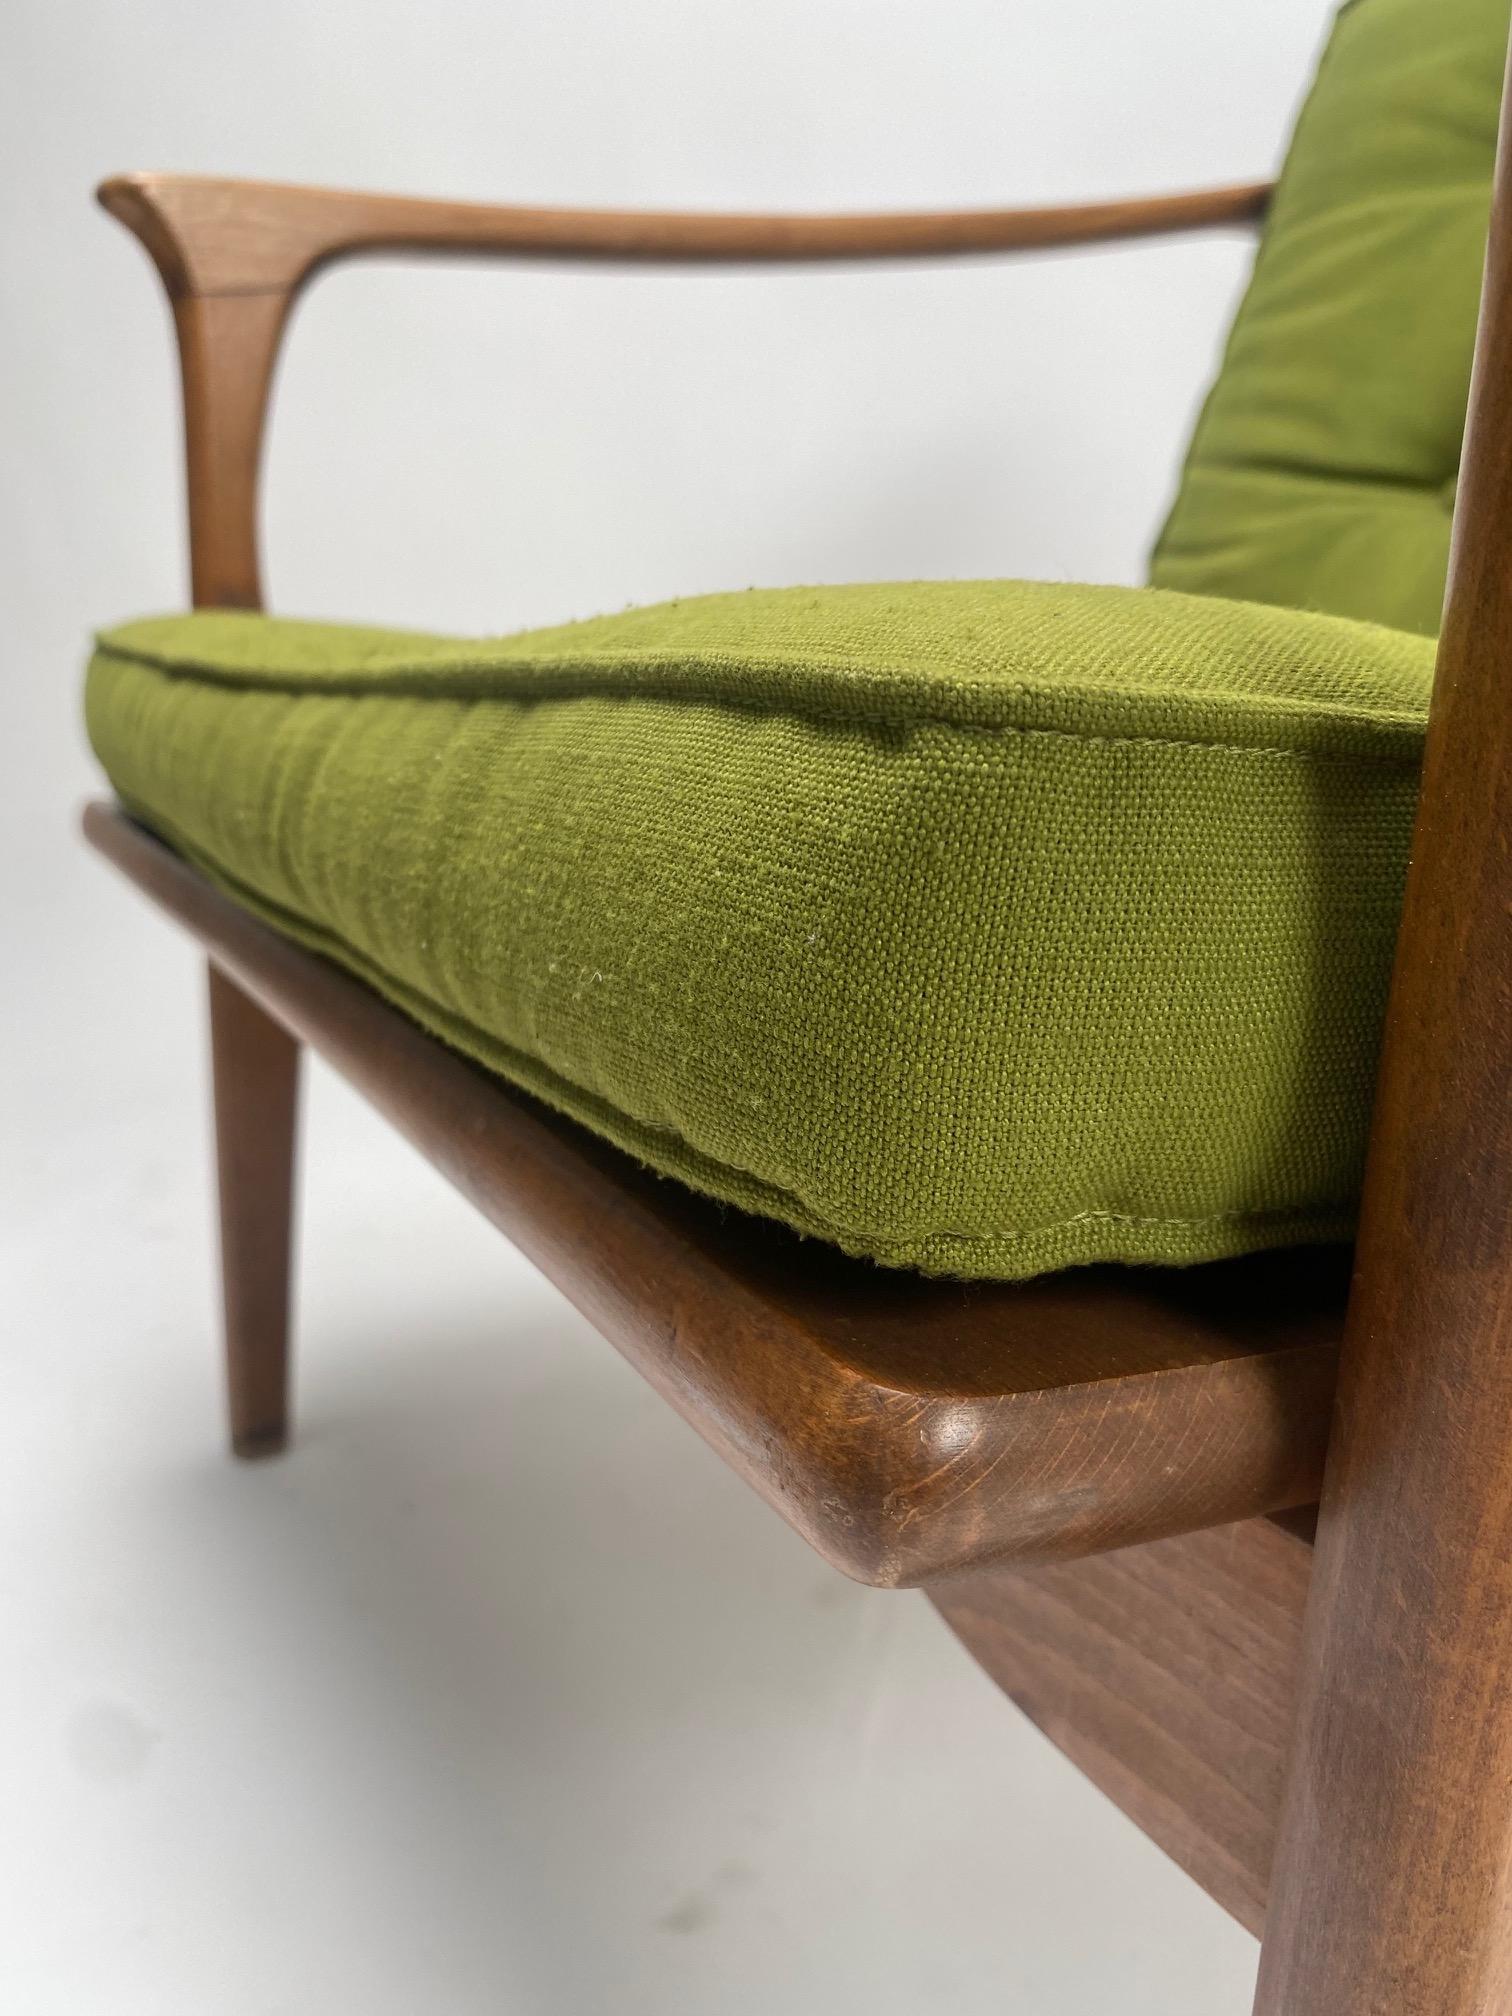 Fabric Mid Century modern organic armchair, Denmark, 1960s.